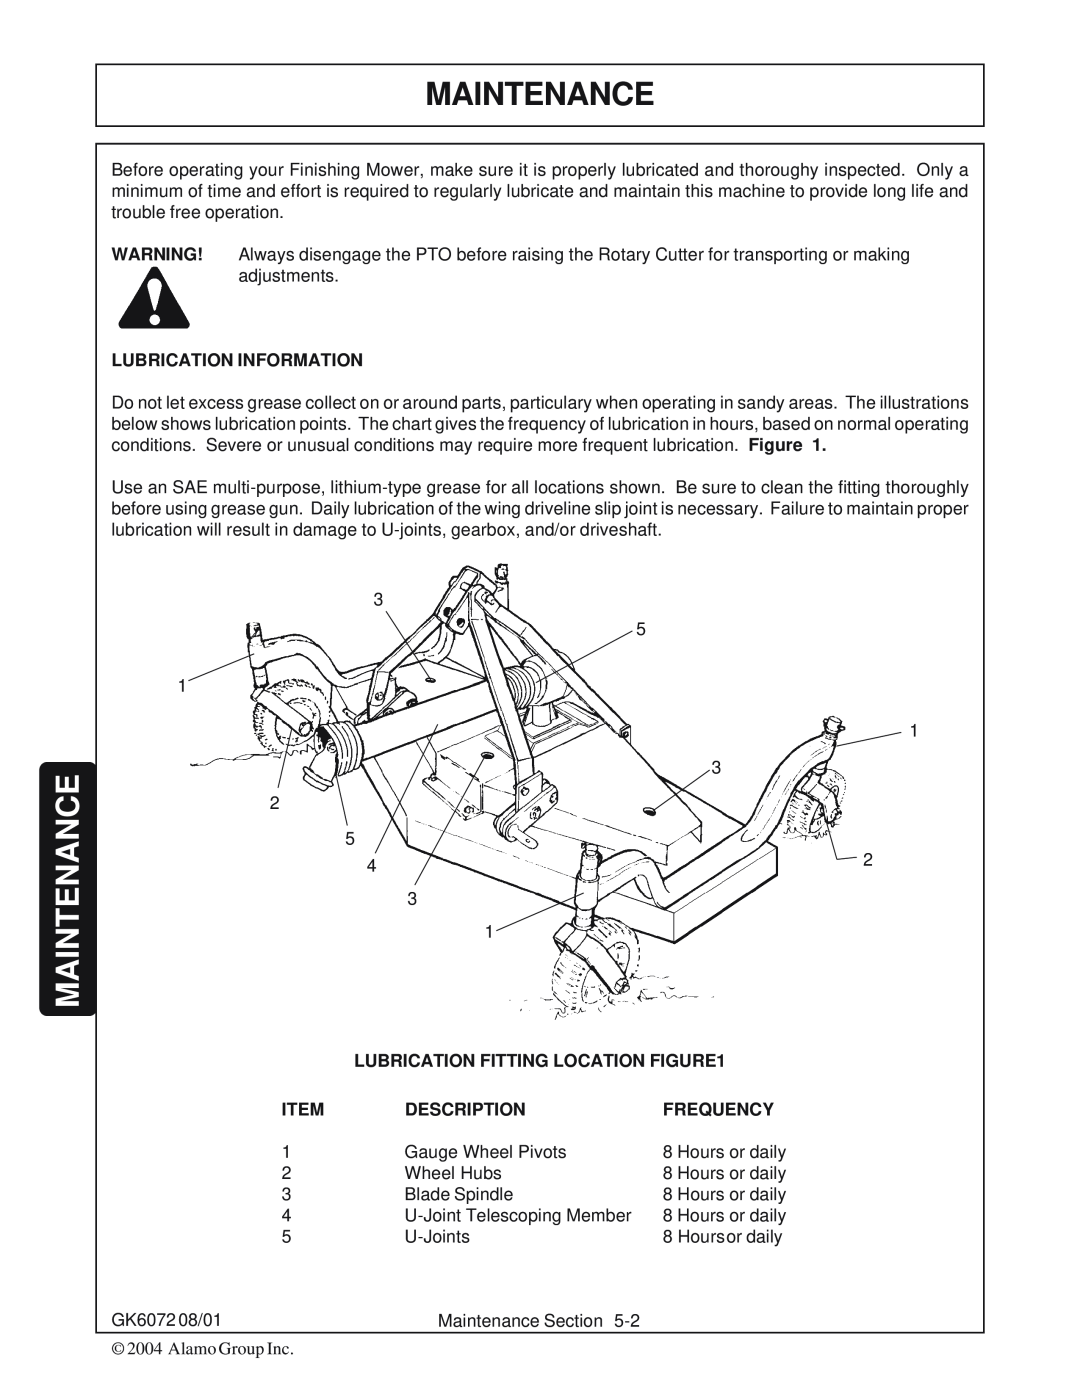 Rhino Mounts GK6072 manual Maintenance, Lubrication Information, Lubrication Fitting Location, Item, Description, Frequency 